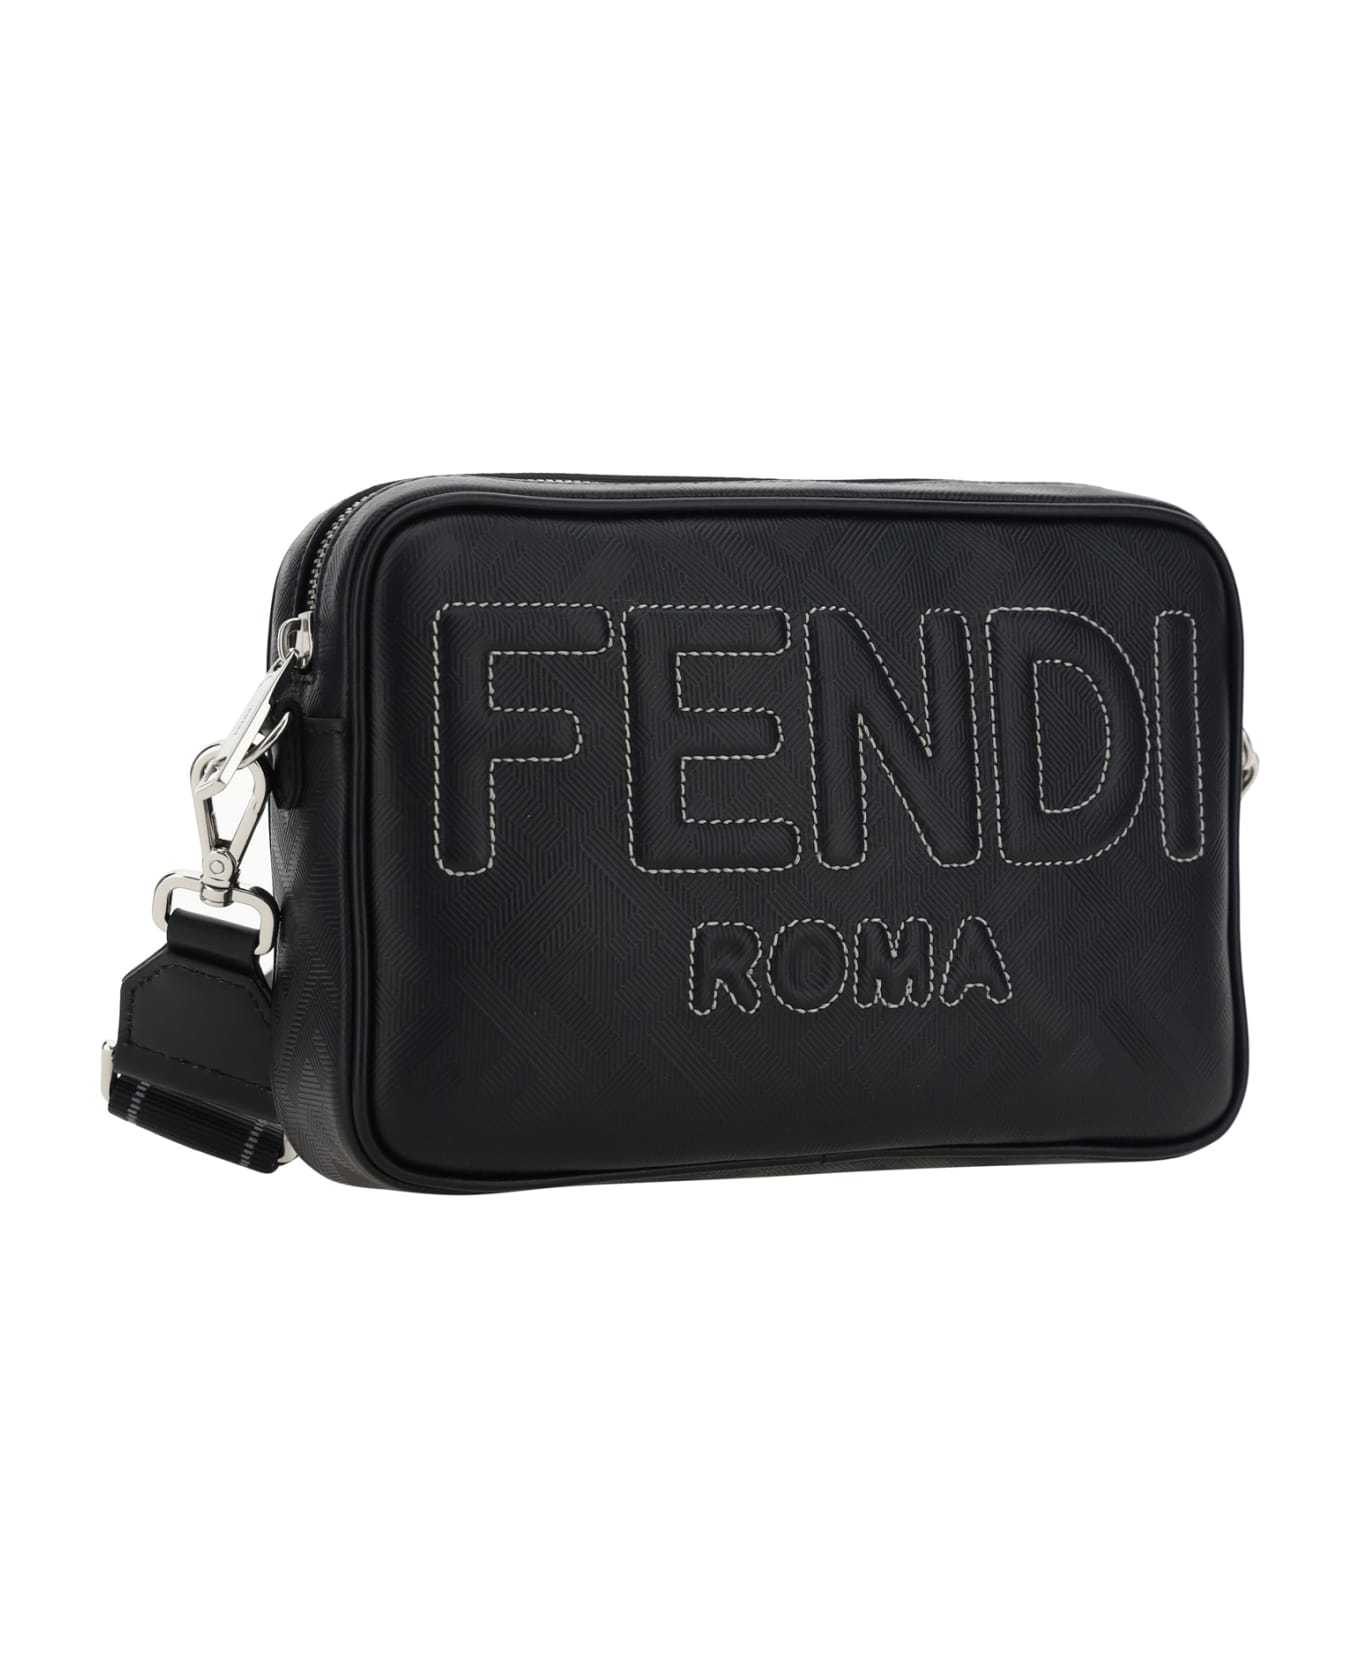 Fendi Camera Fanny Pack - Black